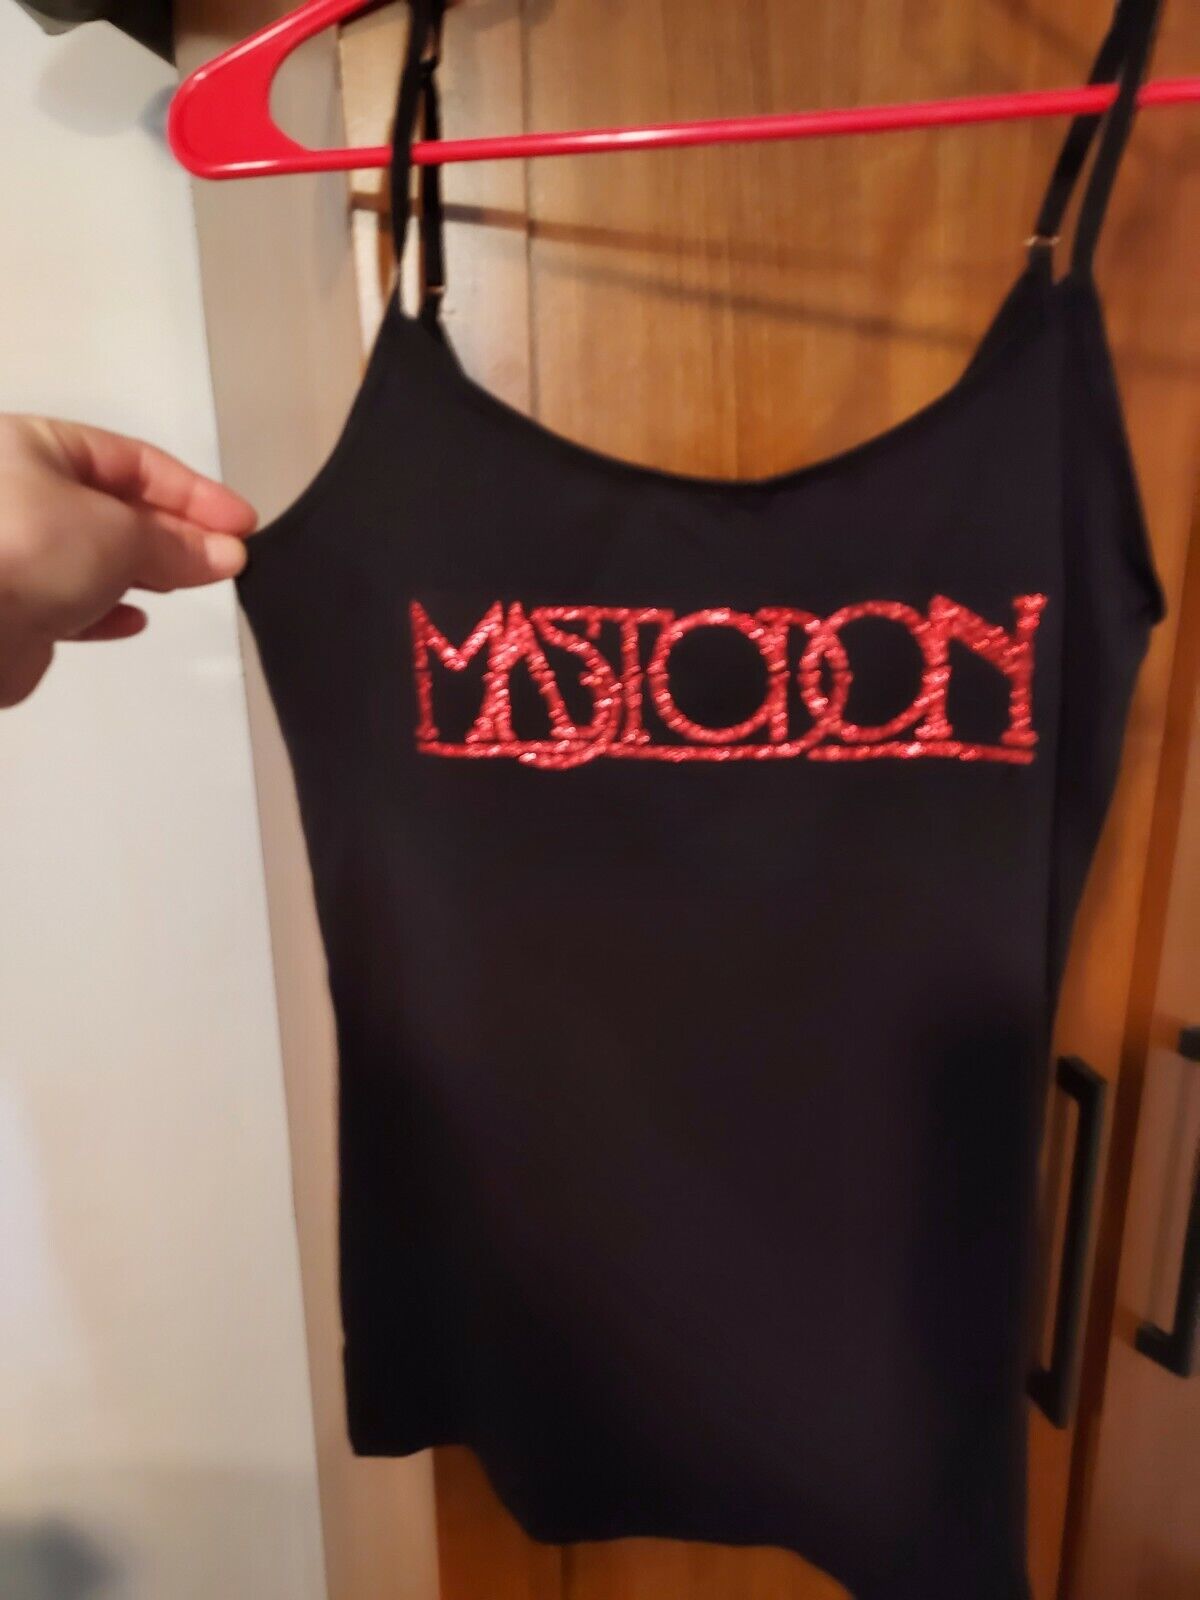 Mastodon shirt Mastodon tank top any size avail xs through xxl adjustable